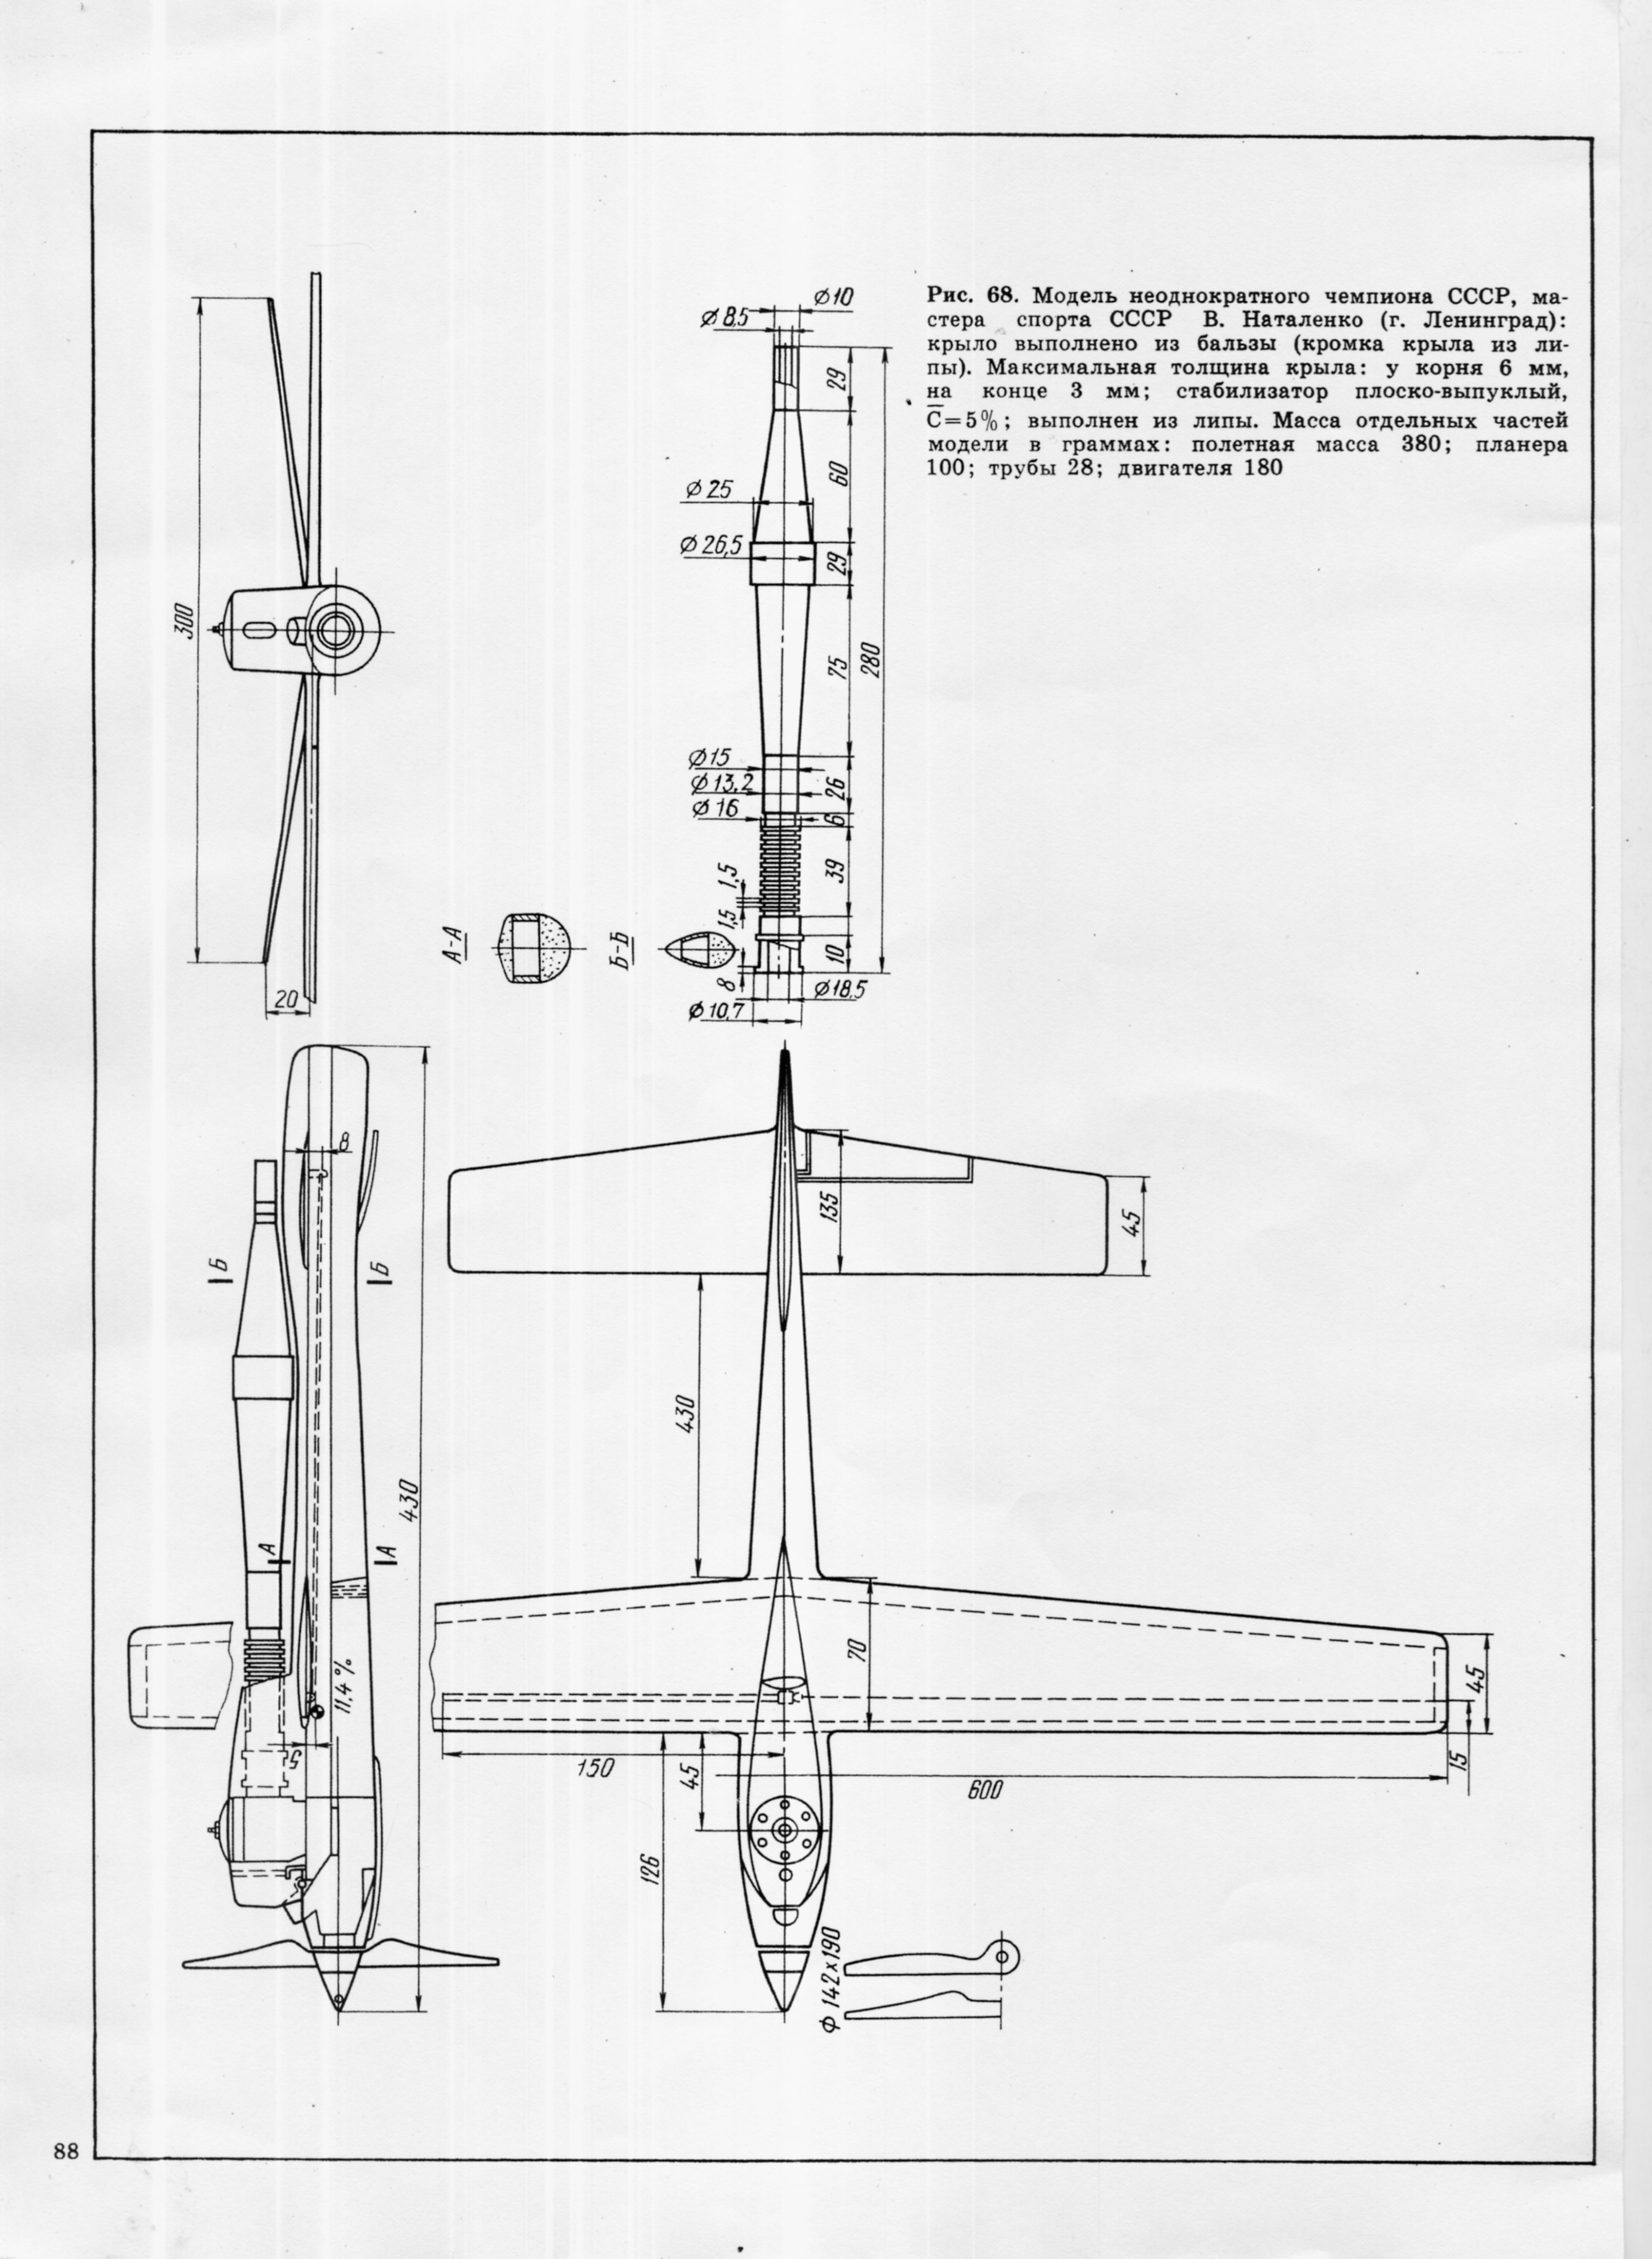 Программа для чертежей самолетов